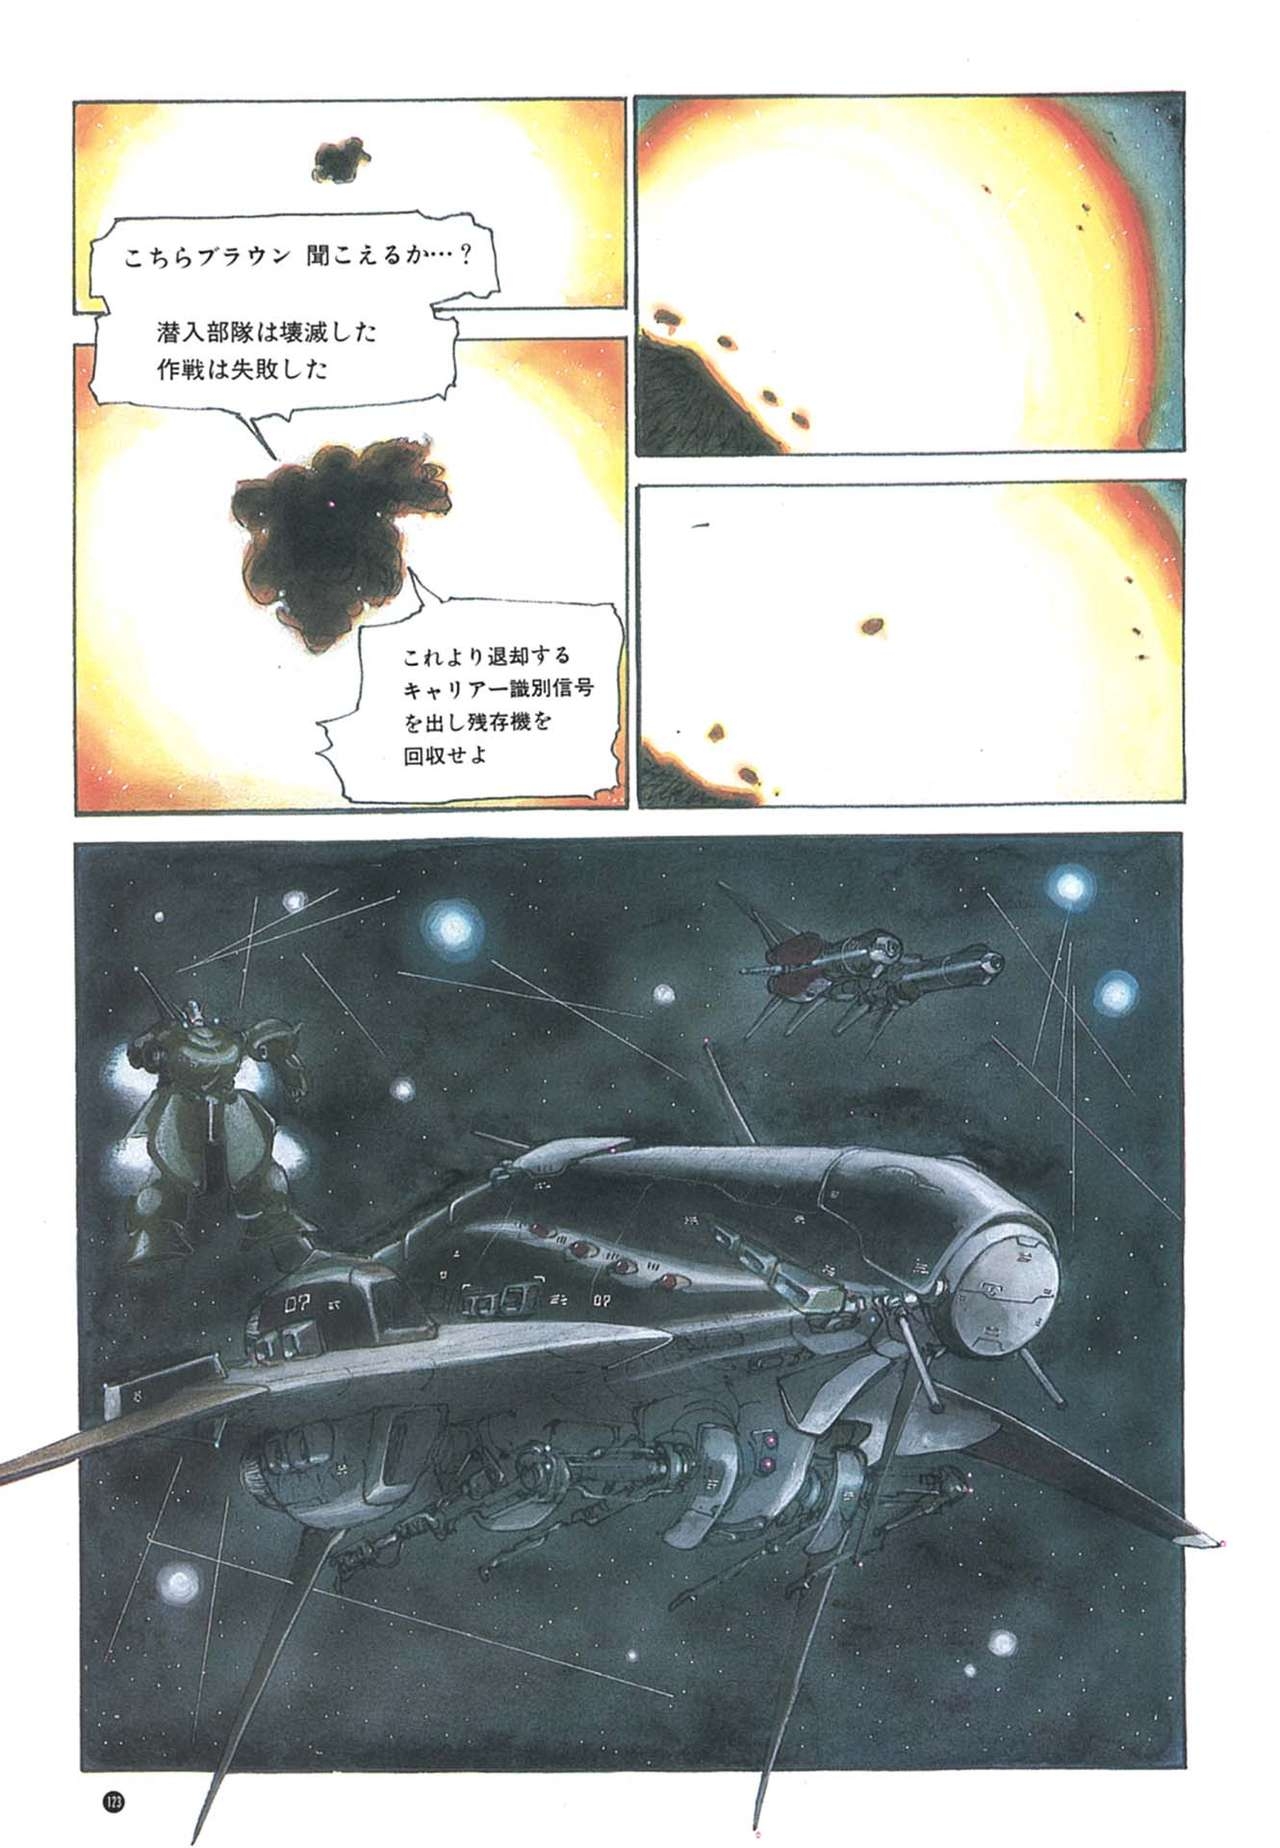 [Kazuhisa Kondo] Kazuhisa Kondo 2D & 3D Works - Go Ahead - From Mobile Suit Gundam to Original Mechanism 122